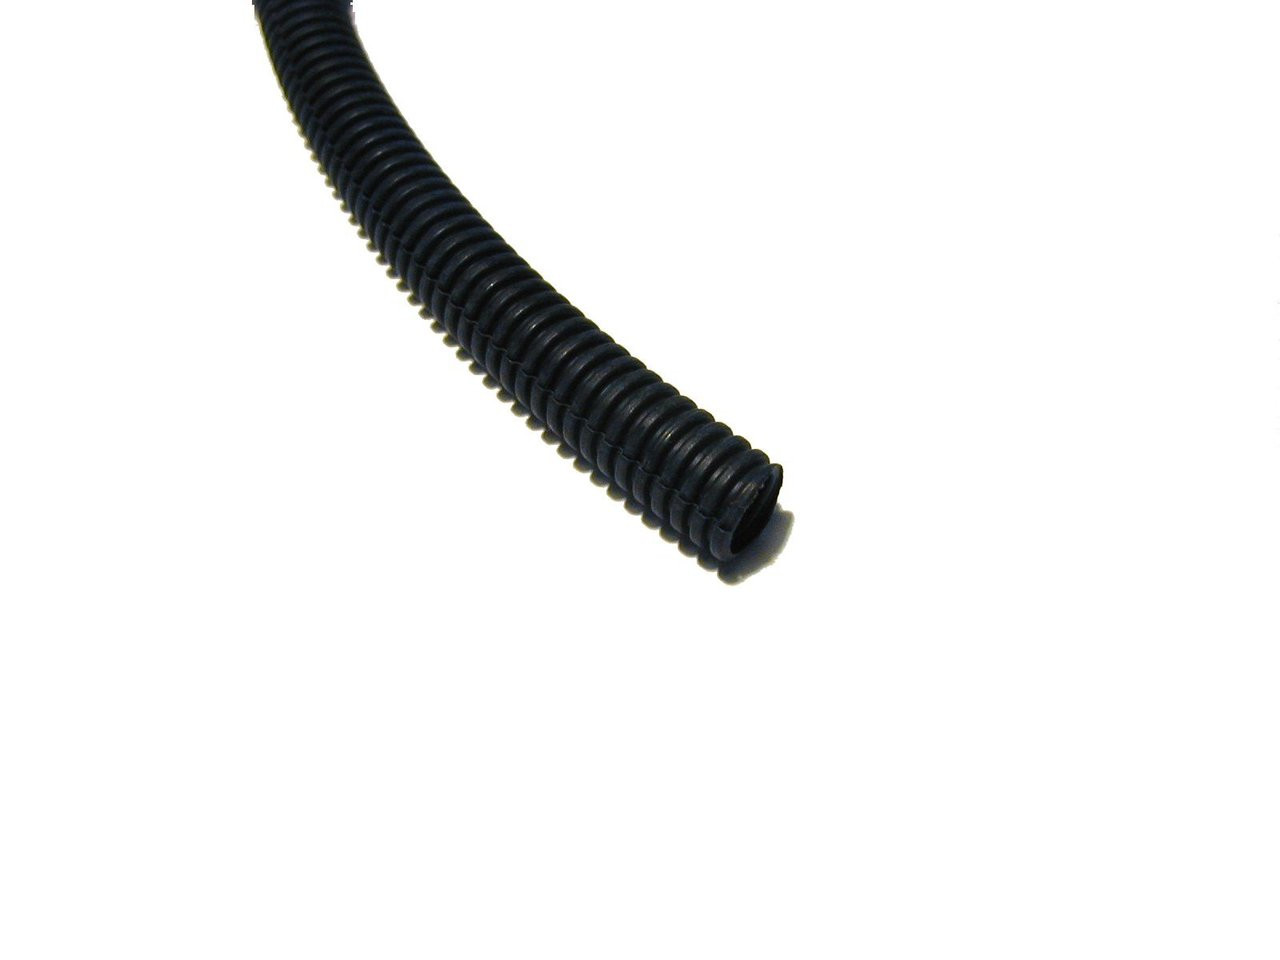 https://cdn11.bigcommerce.com/s-lqmdu1tdke/images/stencil/1280x1280/products/1973/40201/lm-bk-1-100-new-100-feet-1-black-split-loom-wire-flexible-tubing-wire-cover-audio__69788.1557326054.jpg?c=2